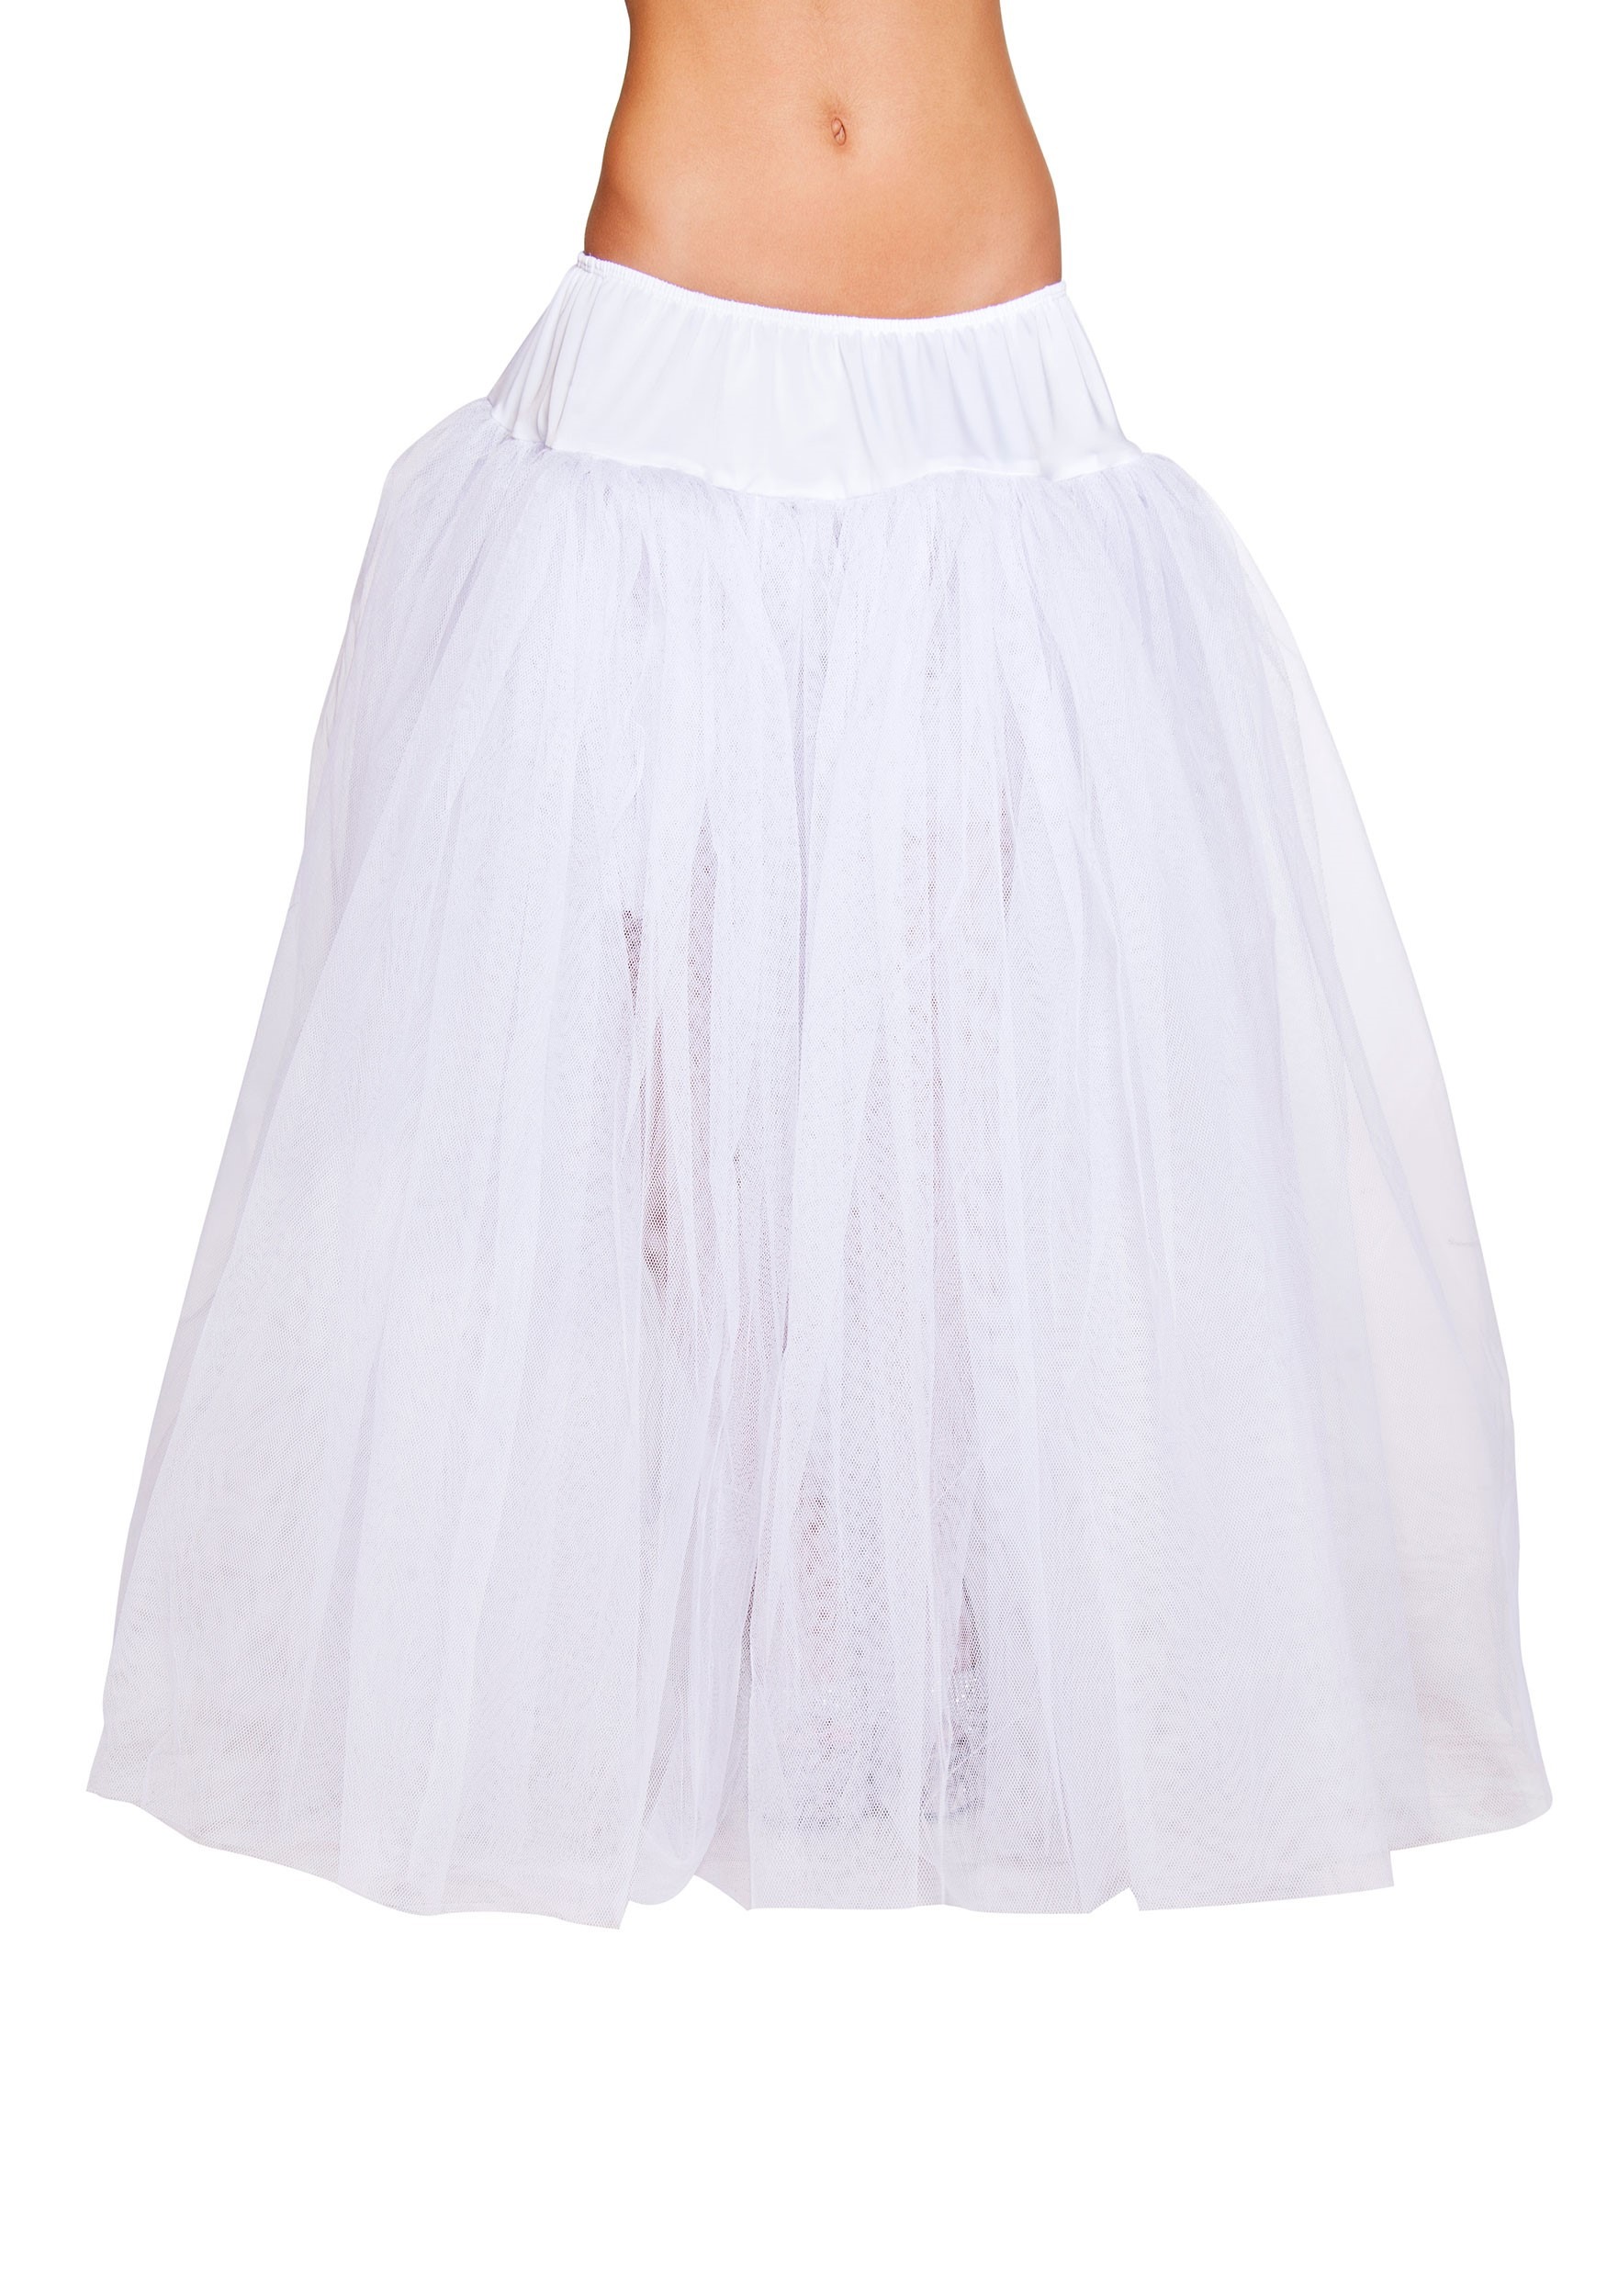 Adult Long White Petticoat